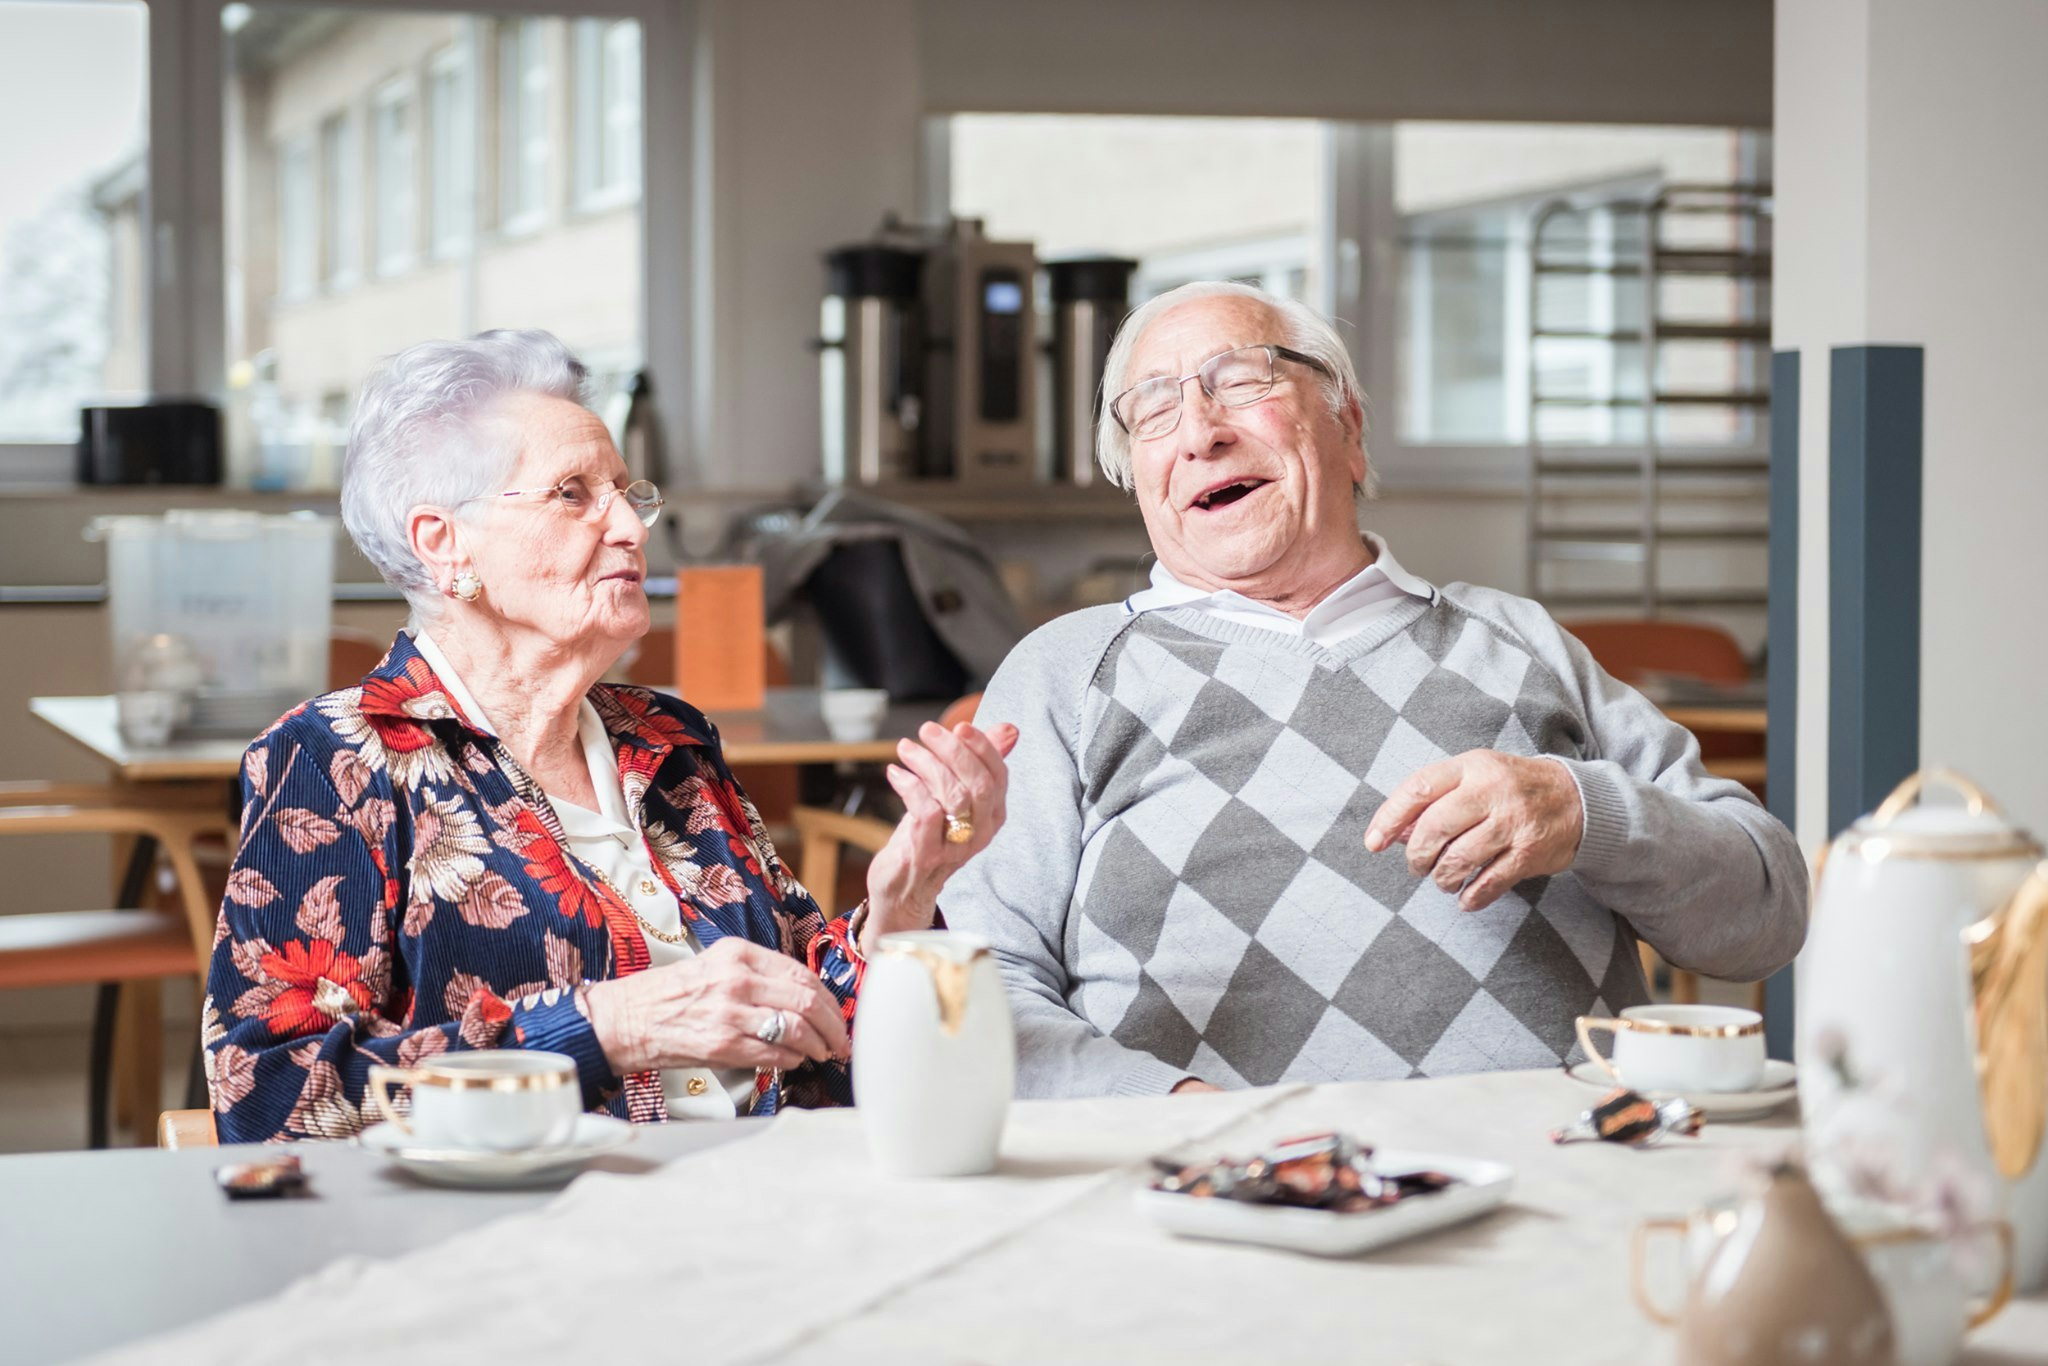 Motena hero image, two elderly people enjoying care in nursery home